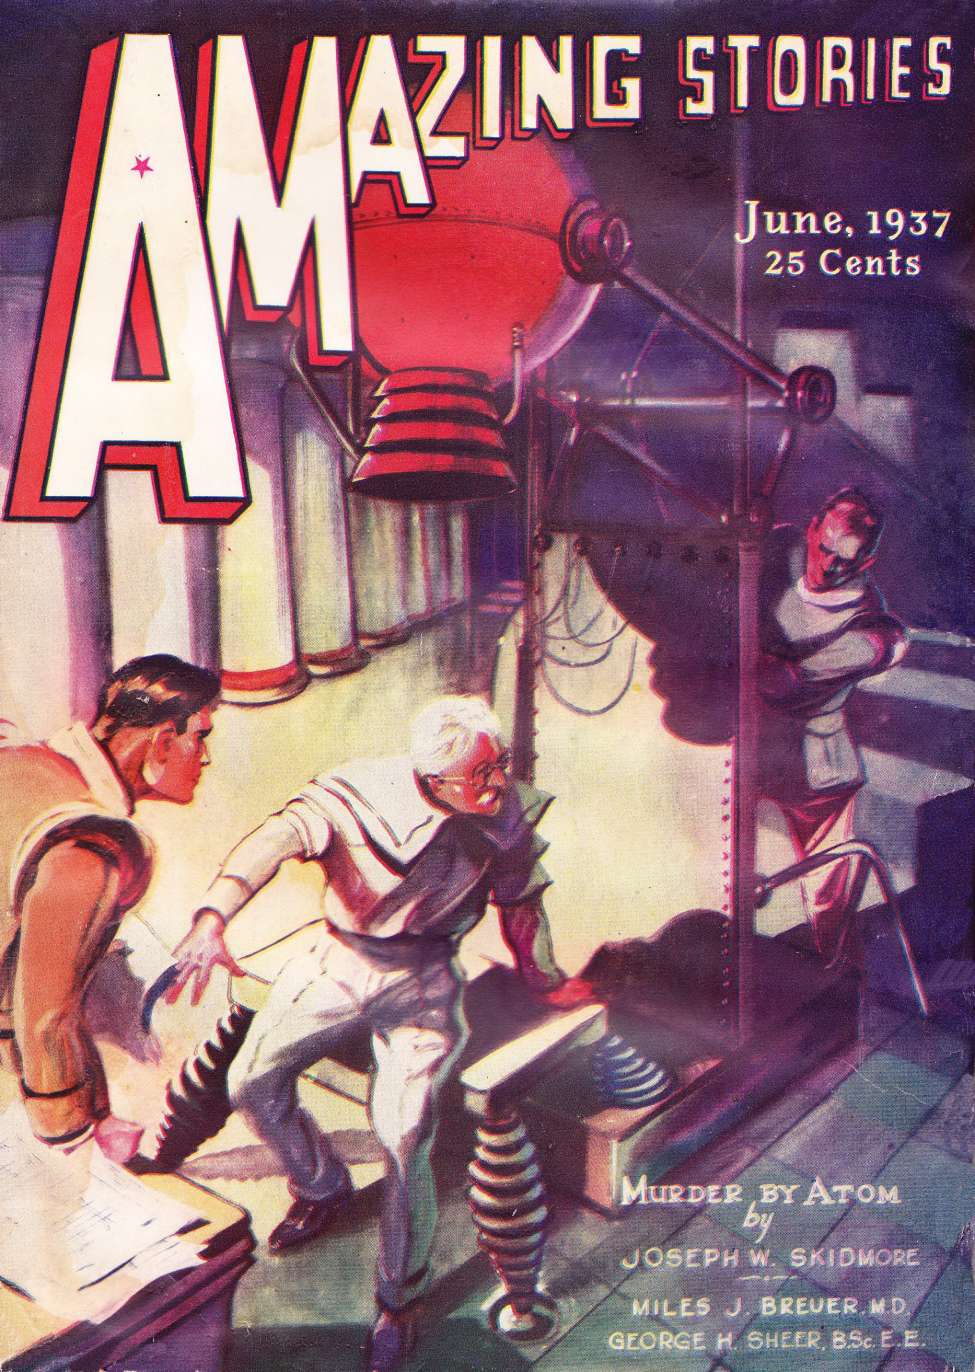 Book Cover For Amazing Stories v11 3 - Murder by Atom - Joseph Wm. Skidmore